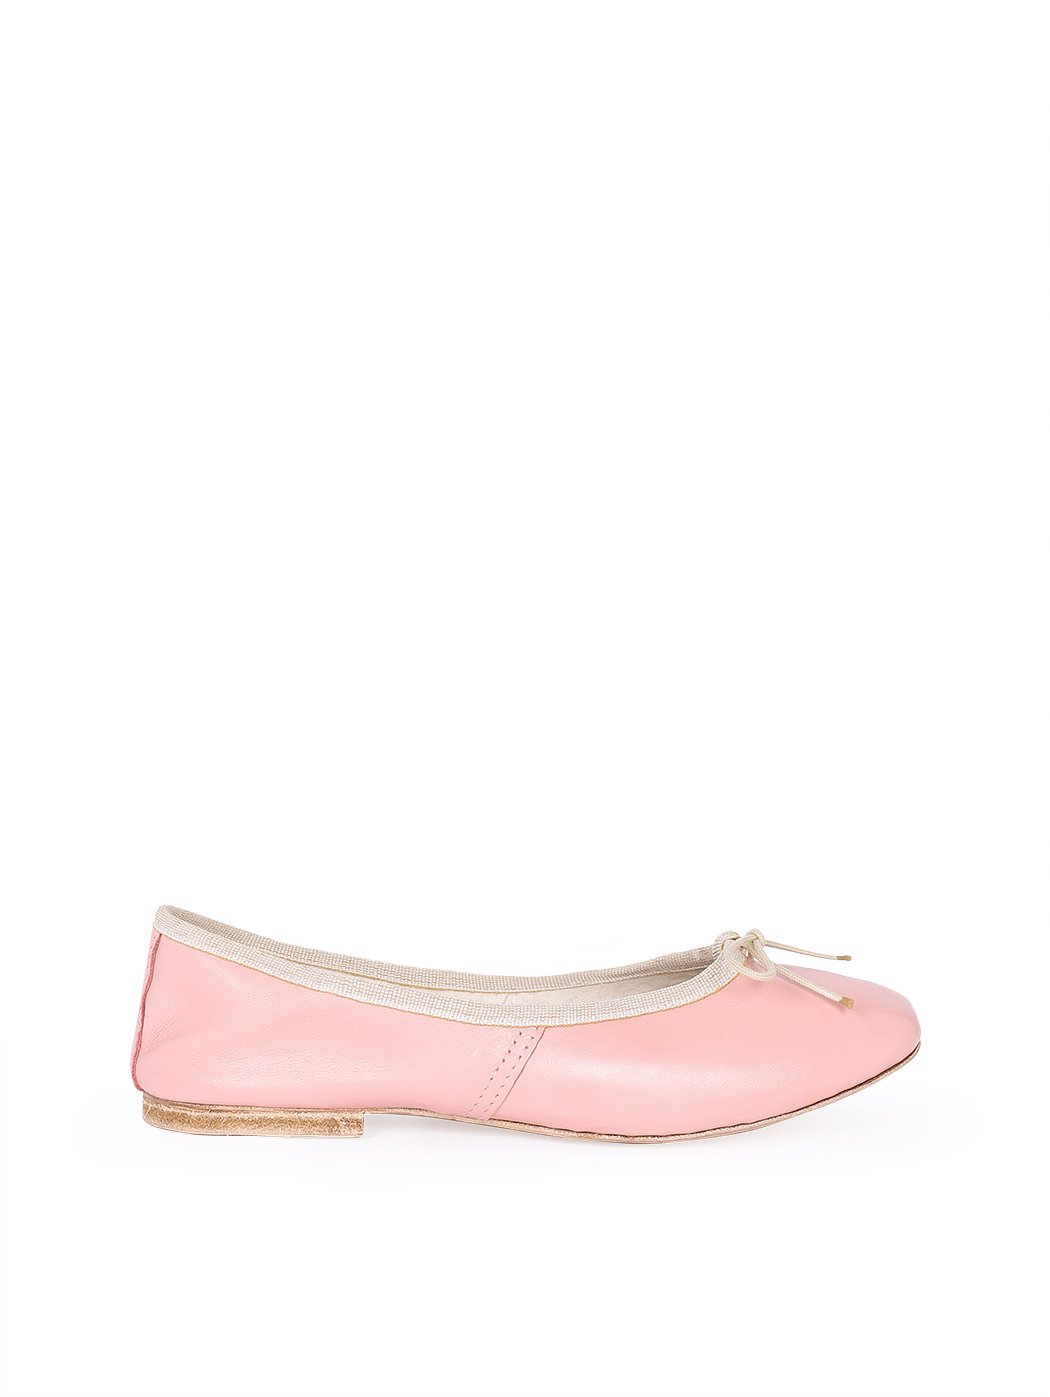 Ballet Flats Pink with Bone trim